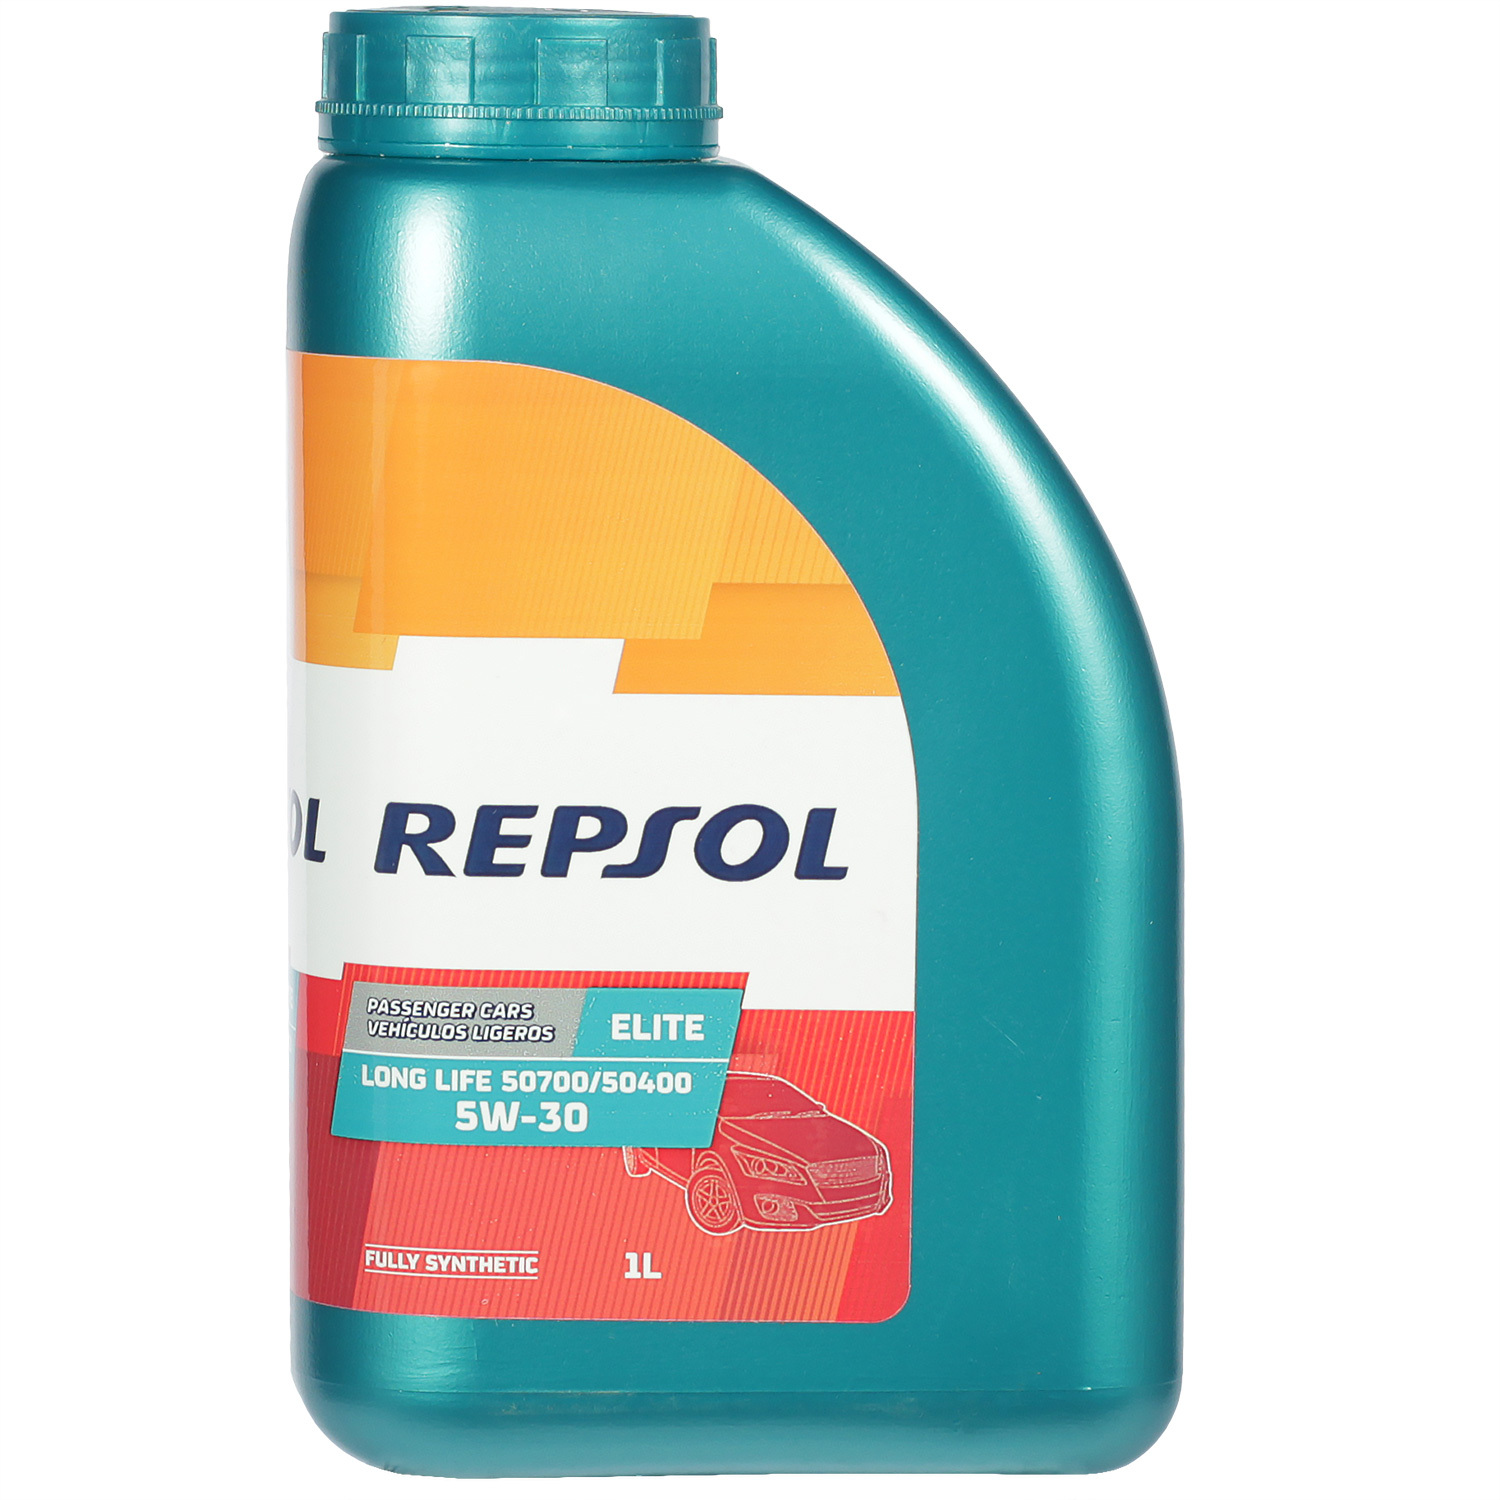 Repsol Моторное масло Repsol Elite LONG LIFE 50700/50400 5W-30, 1 л repsol моторное масло repsol elite evolution long life 5w 30 4 л